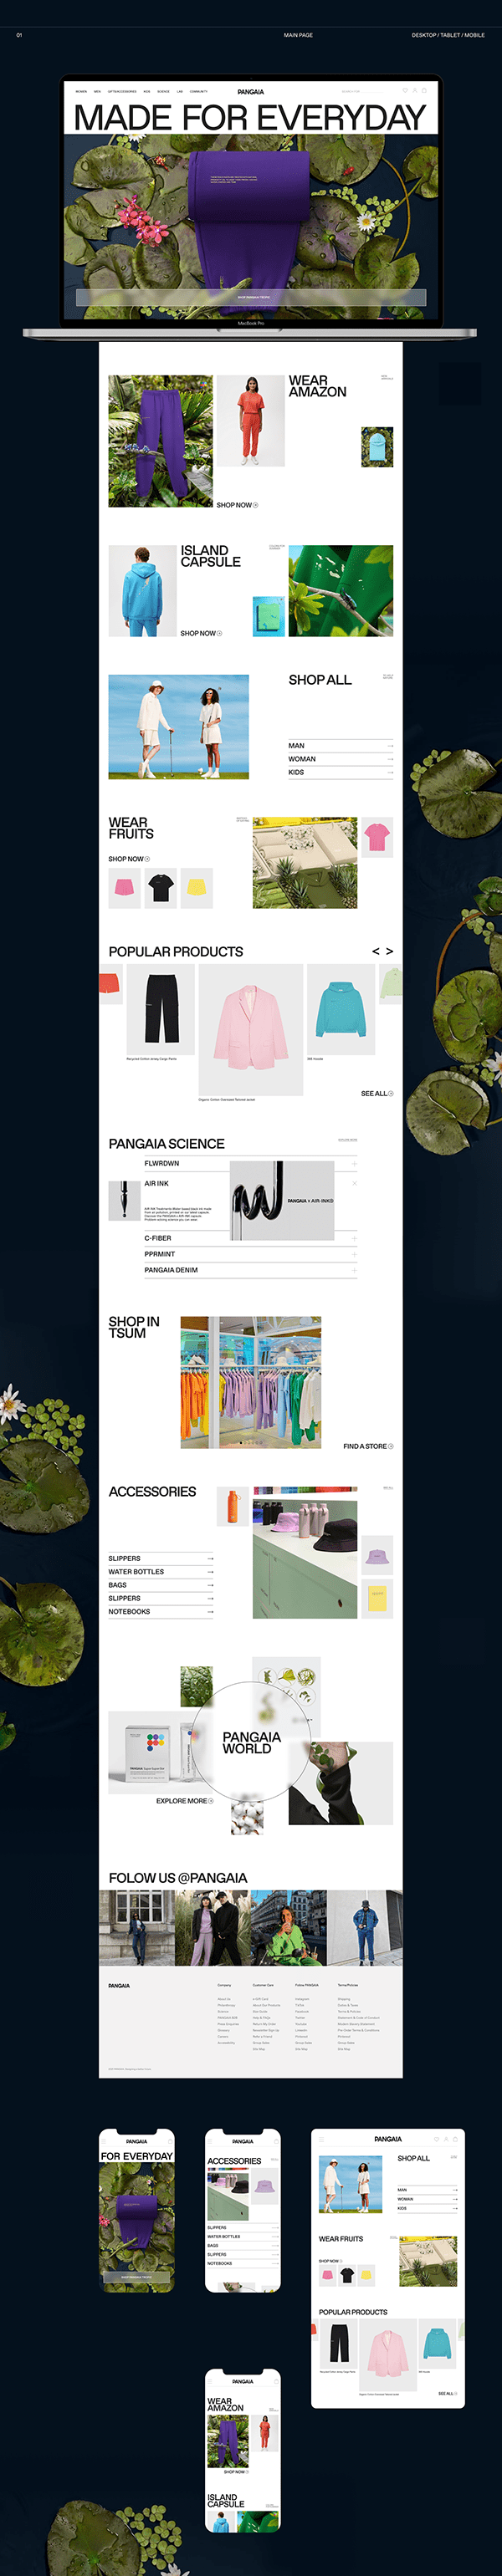 PANGAIA/E-commerce redesign